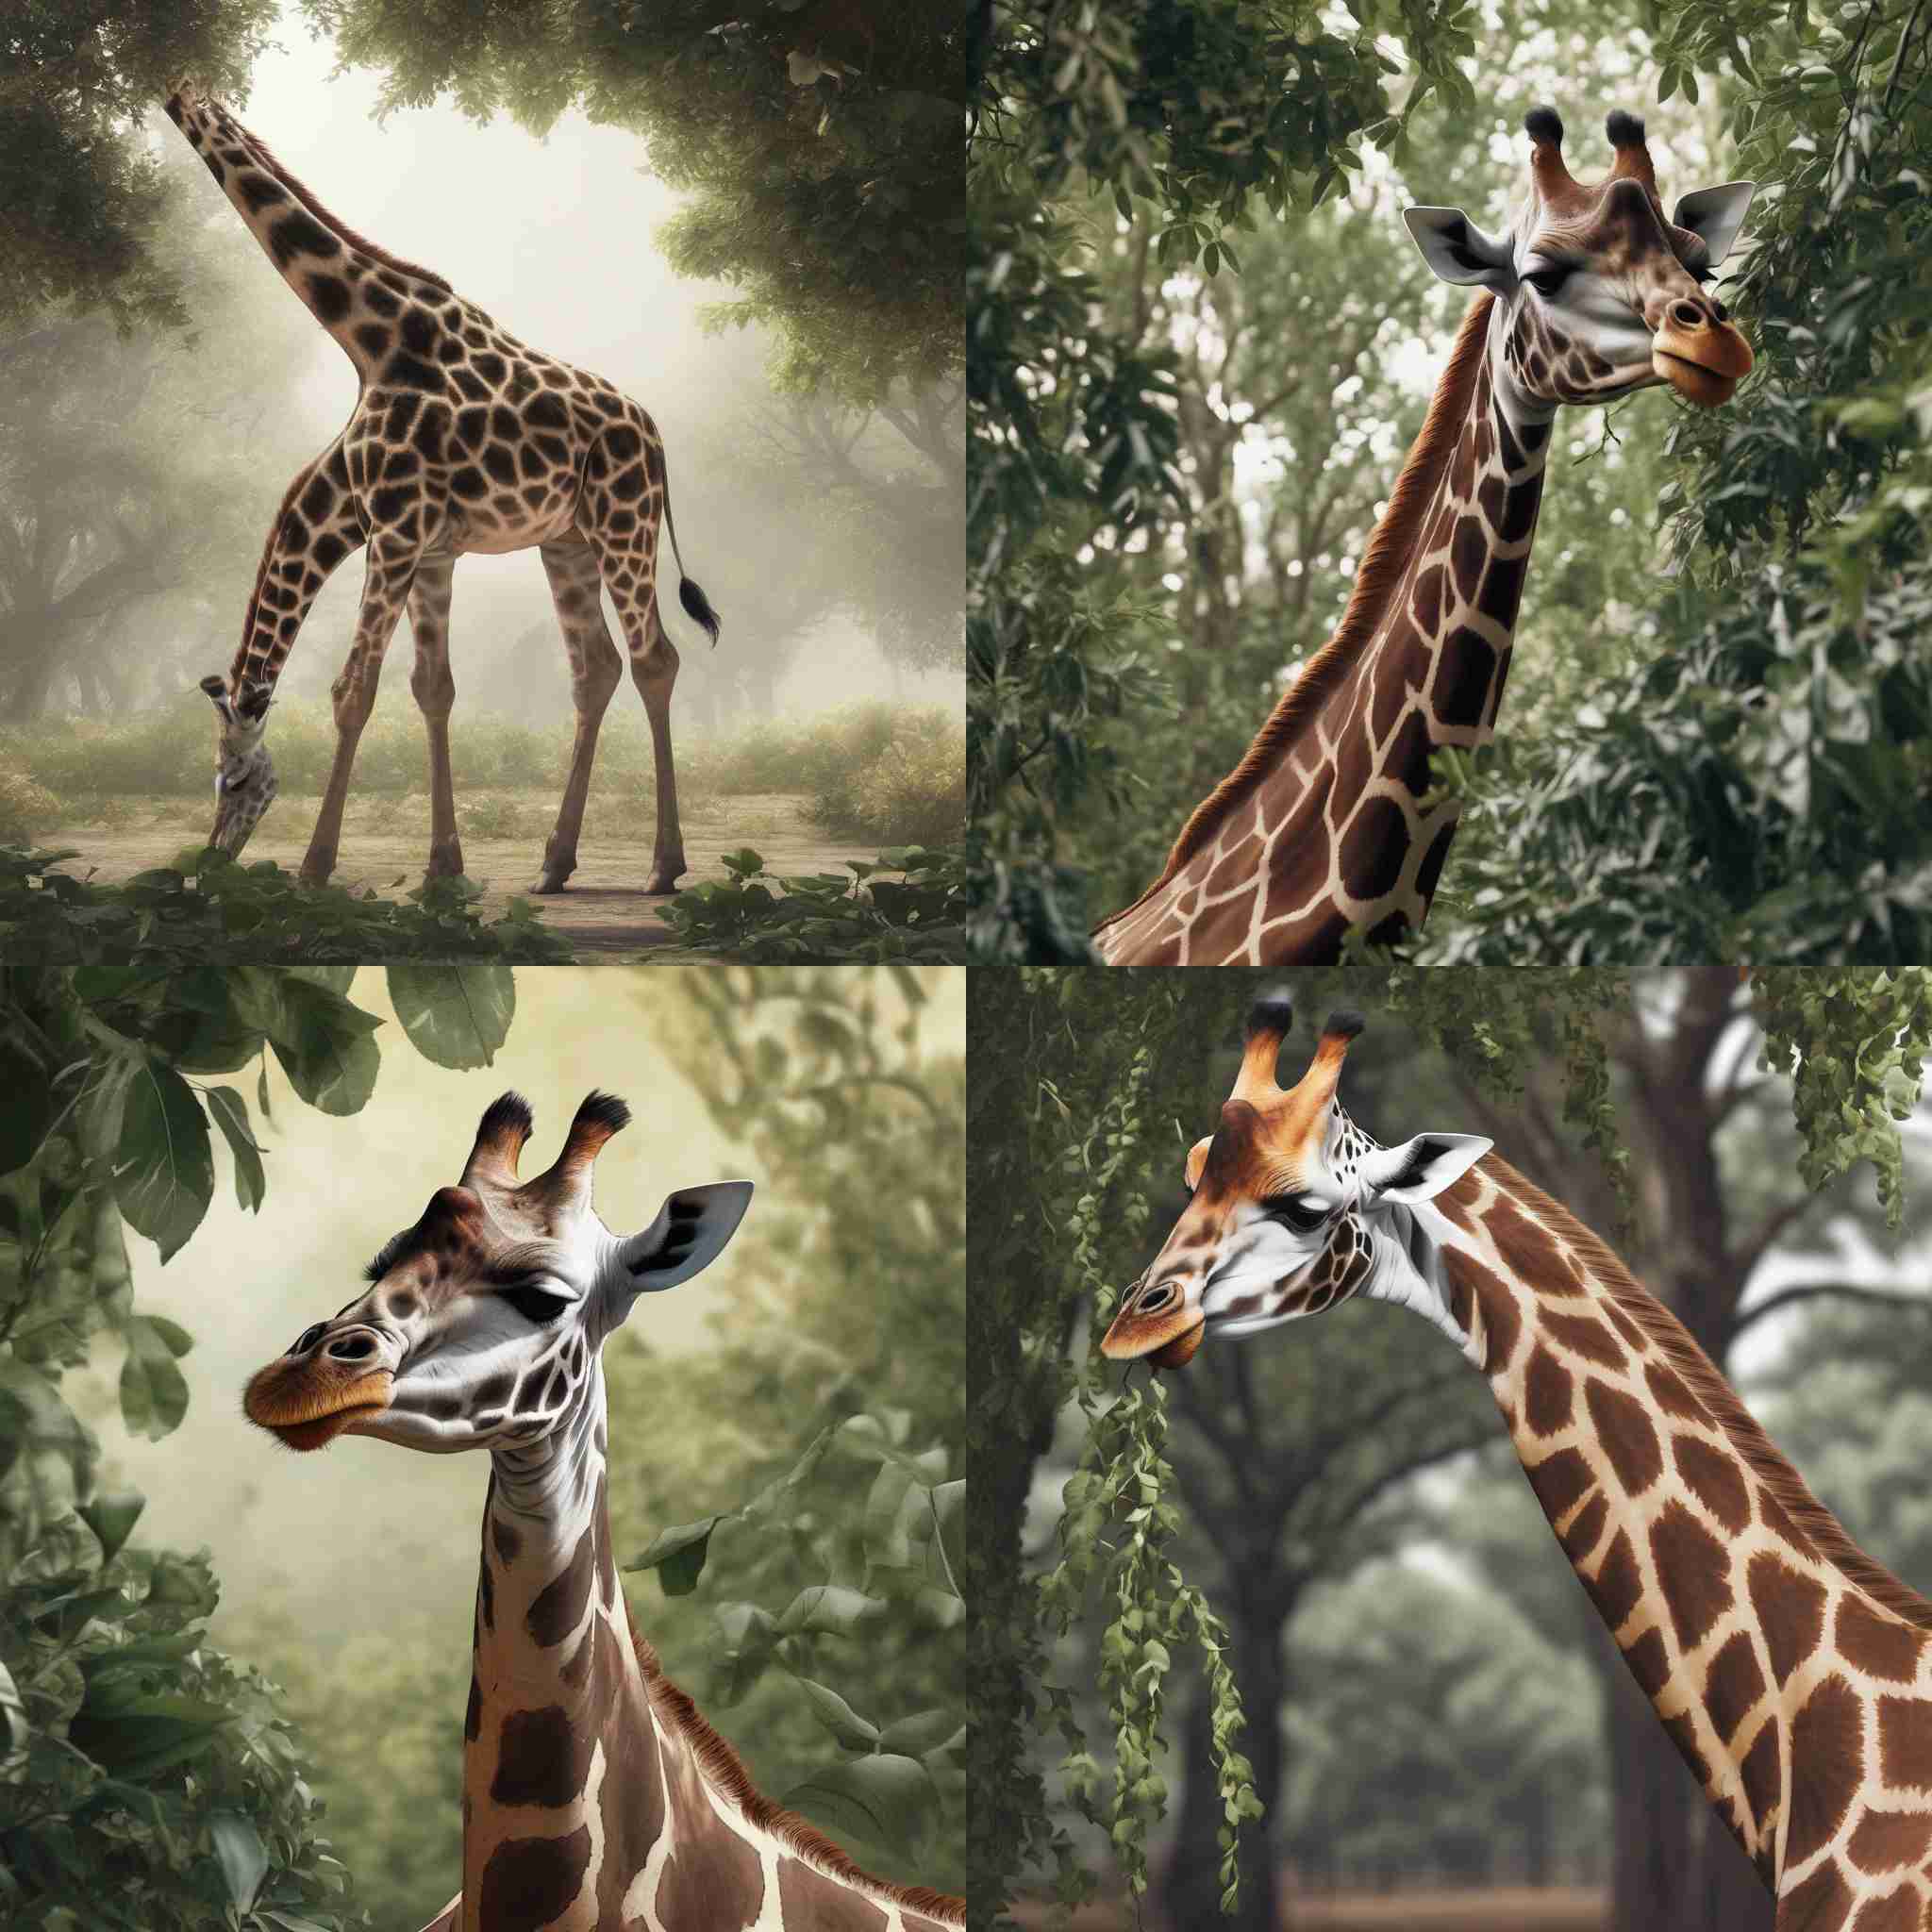 A giraffe eating tree leaves